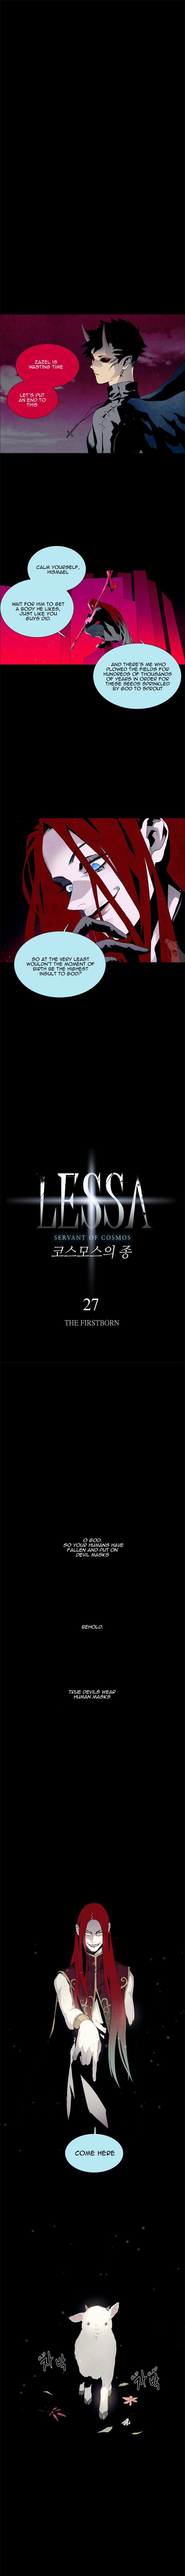 LESSA Servant of Cosmos Ch. 27 The Firstborn